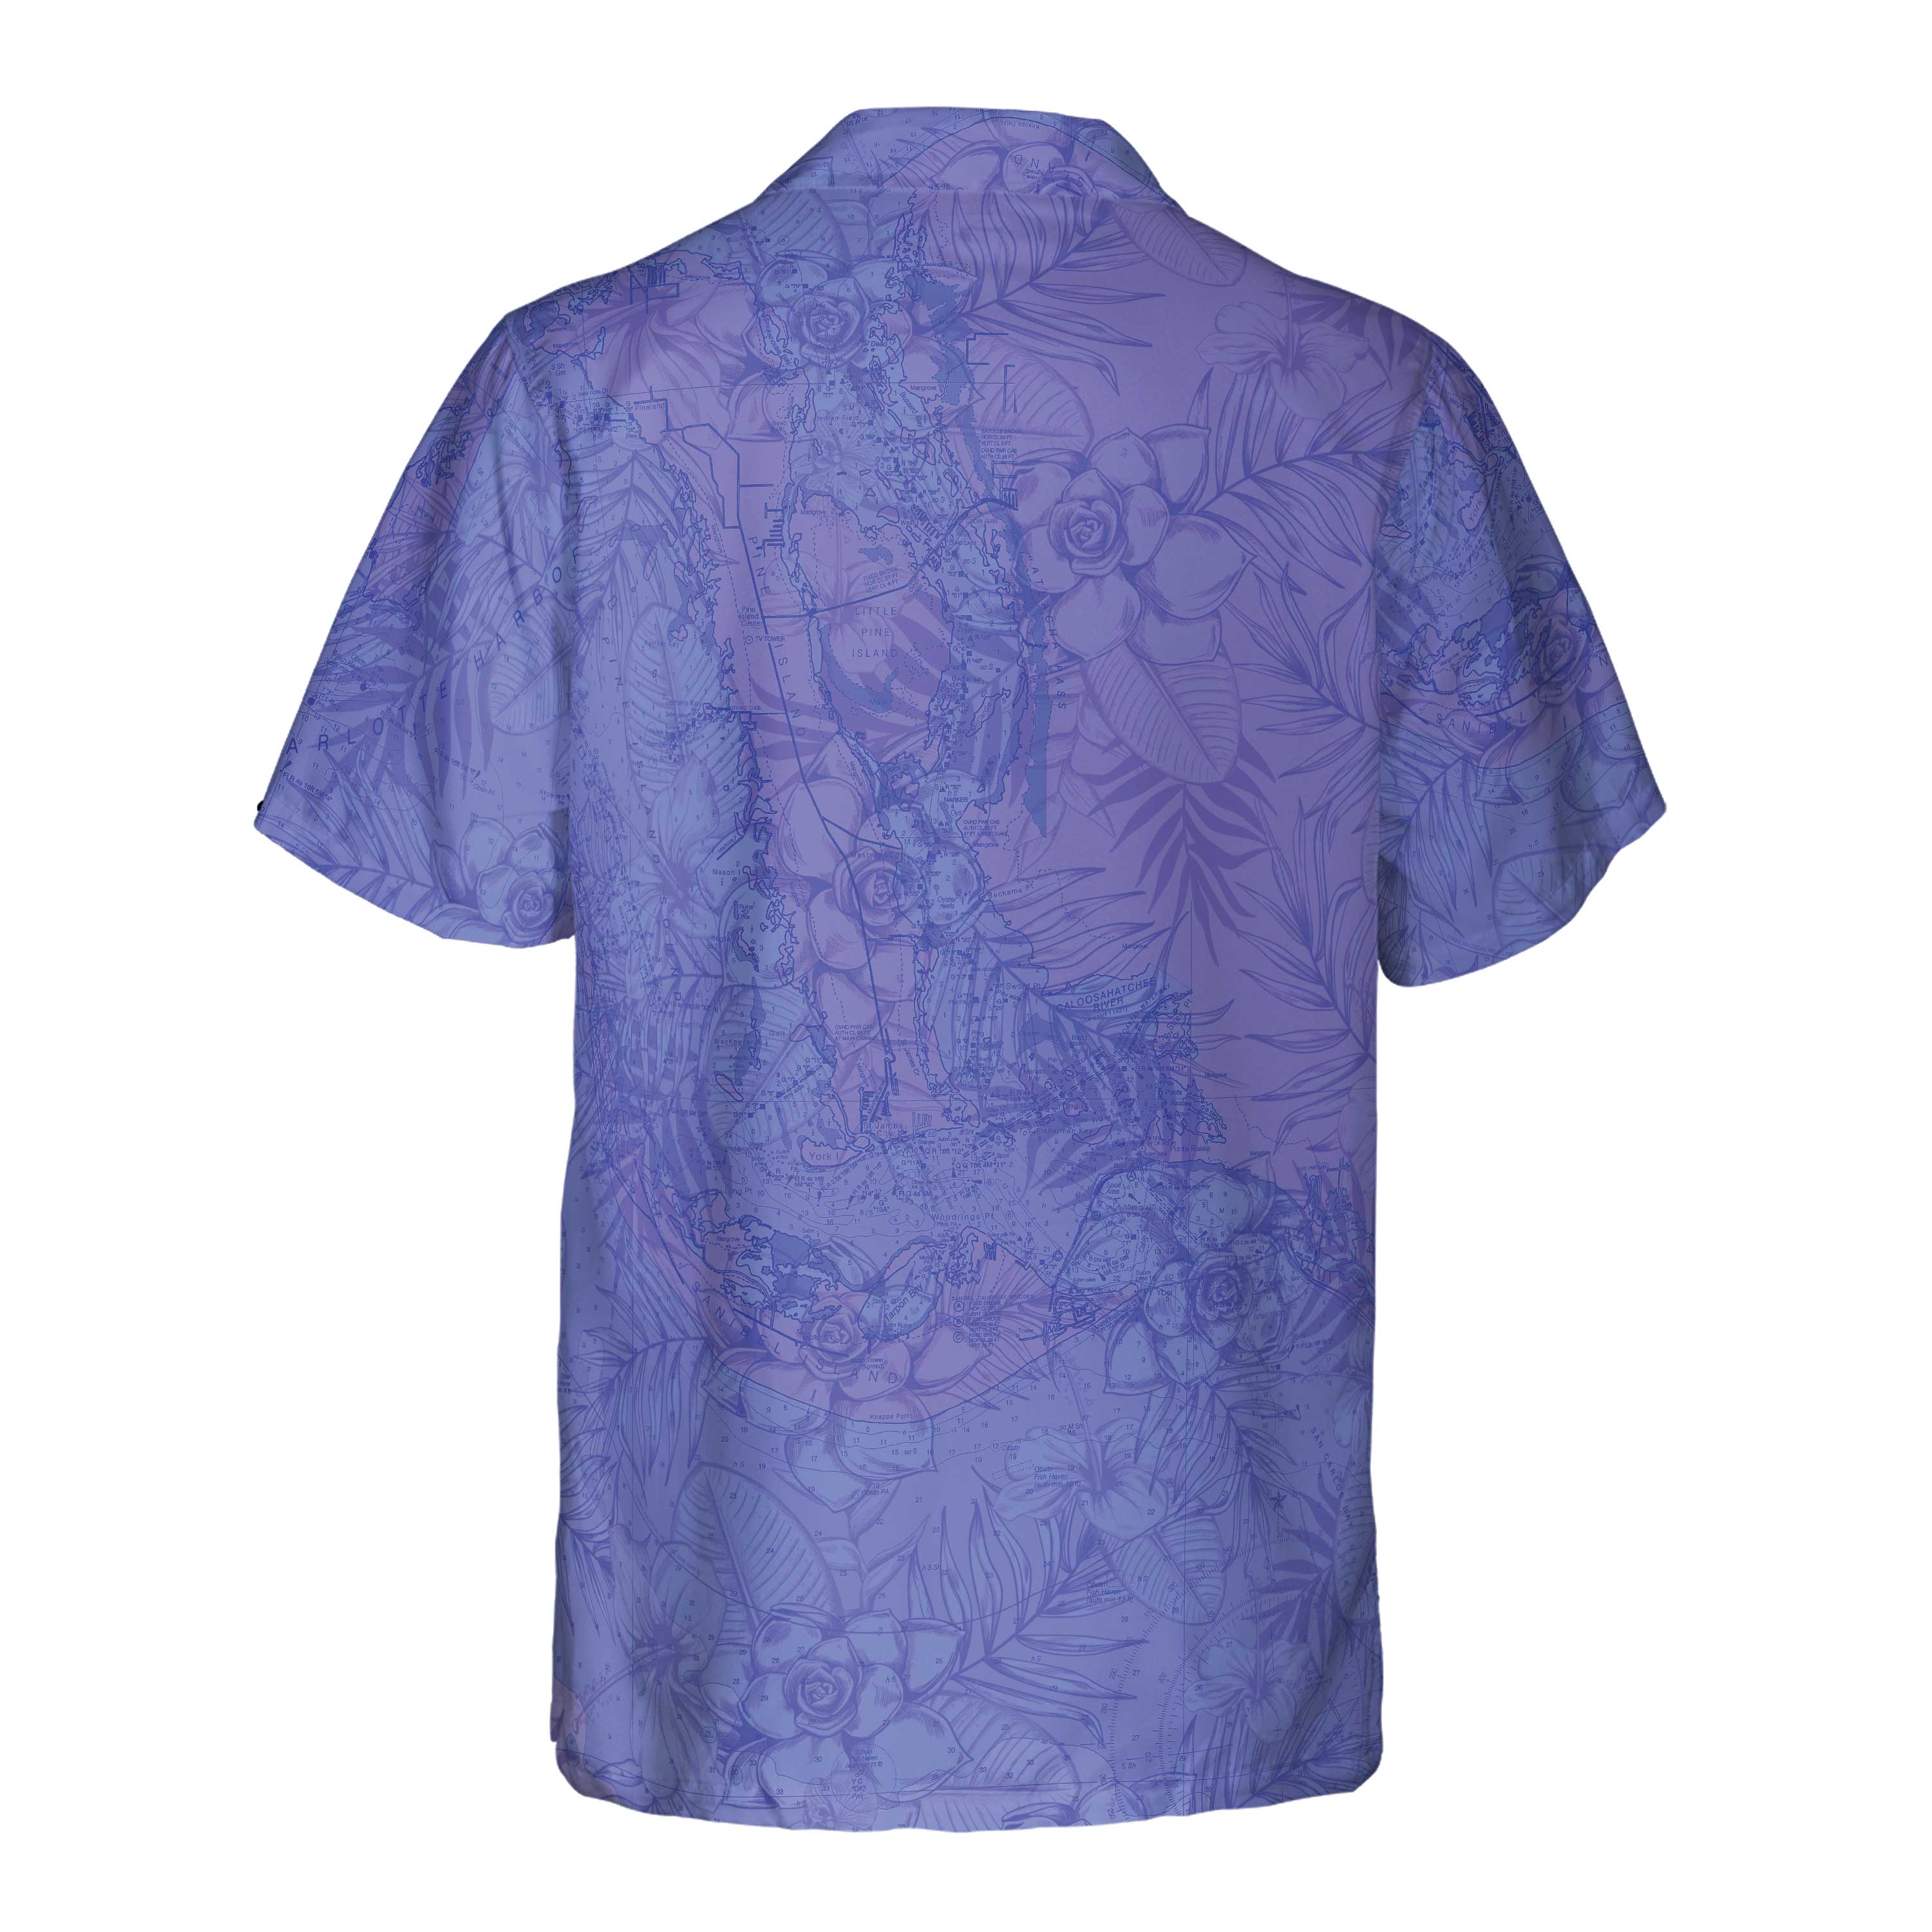 The Punta Gorda Deep Lavender Pocket Shirt